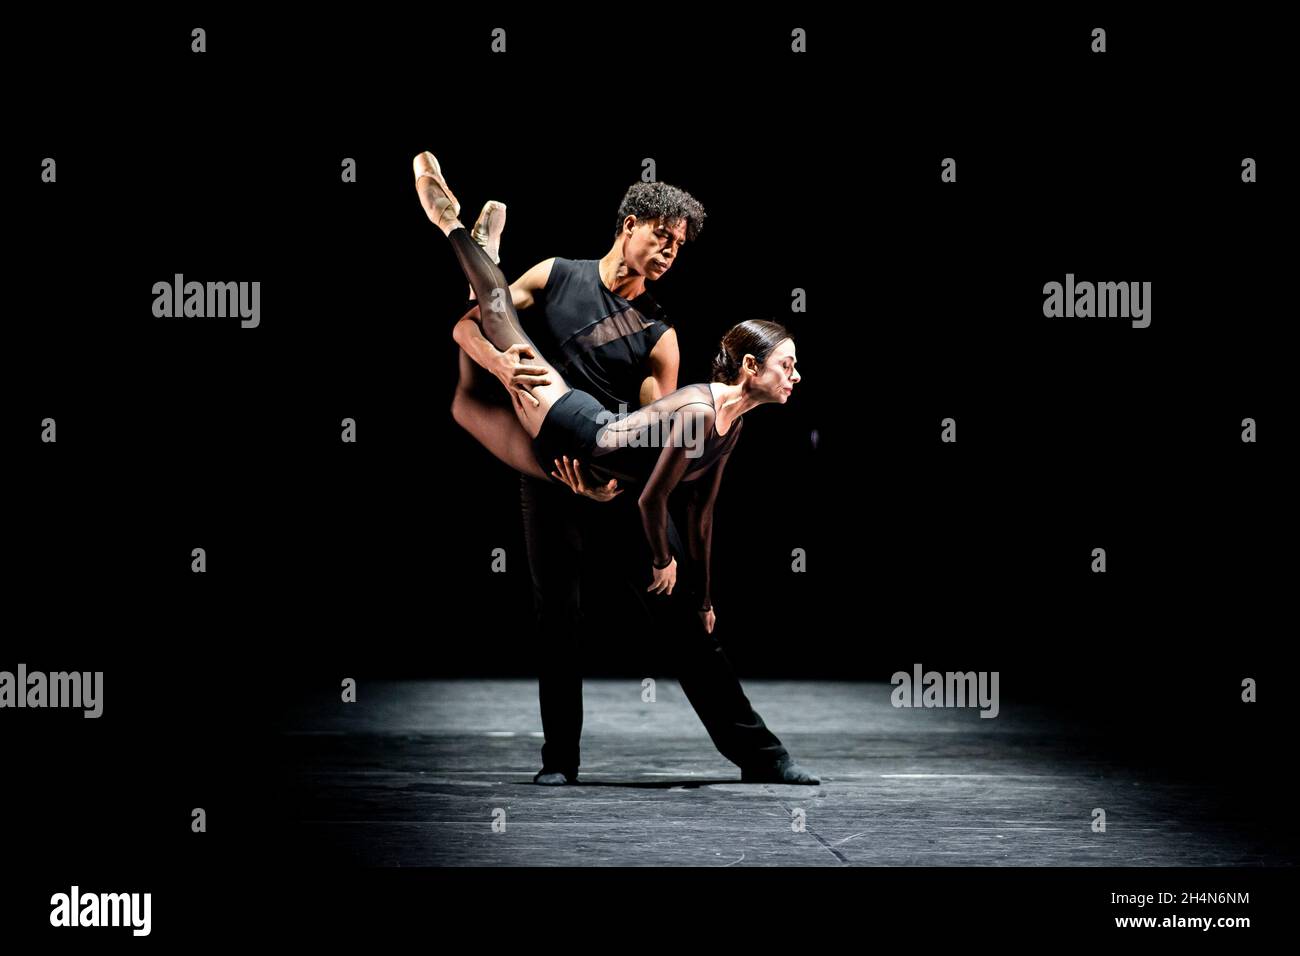 London UK 3rd November 2021 Birmingham Royal Ballet. Alessandra Ferri and  Carlos Acosta perform the world premiere of a new duet Pas de Deux by Goyo  Montero as part of Birmingham Royal